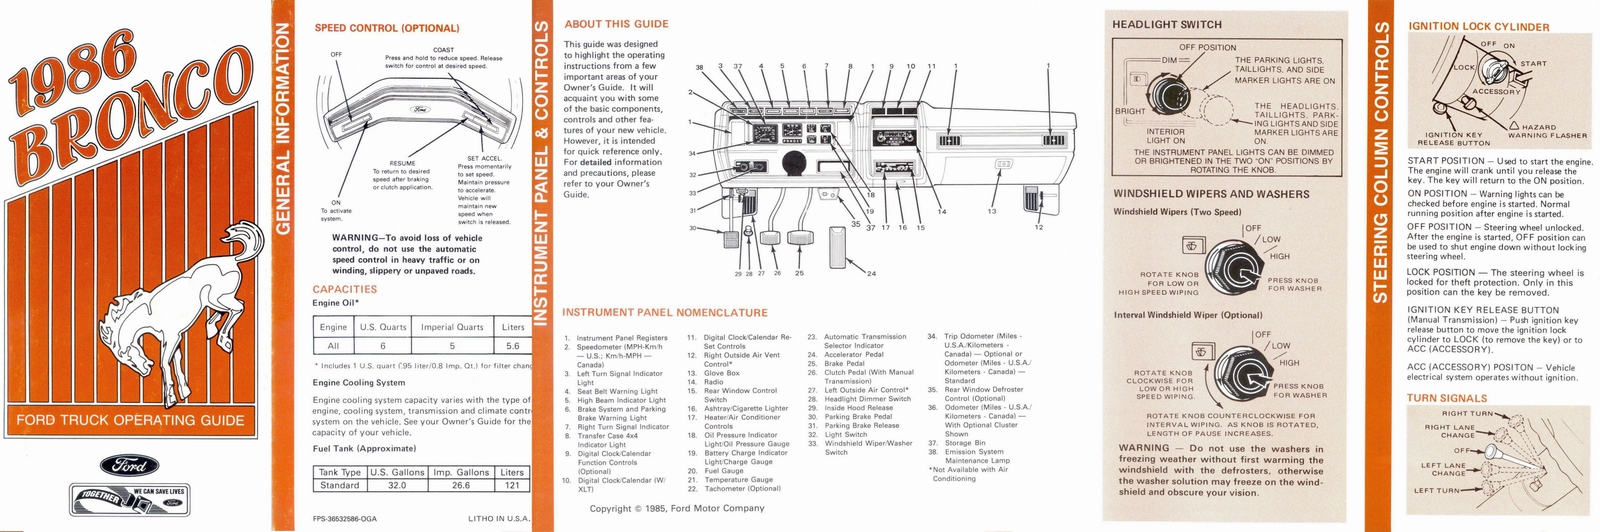 n_1986 Ford Bronco Operating Guide-01.jpg